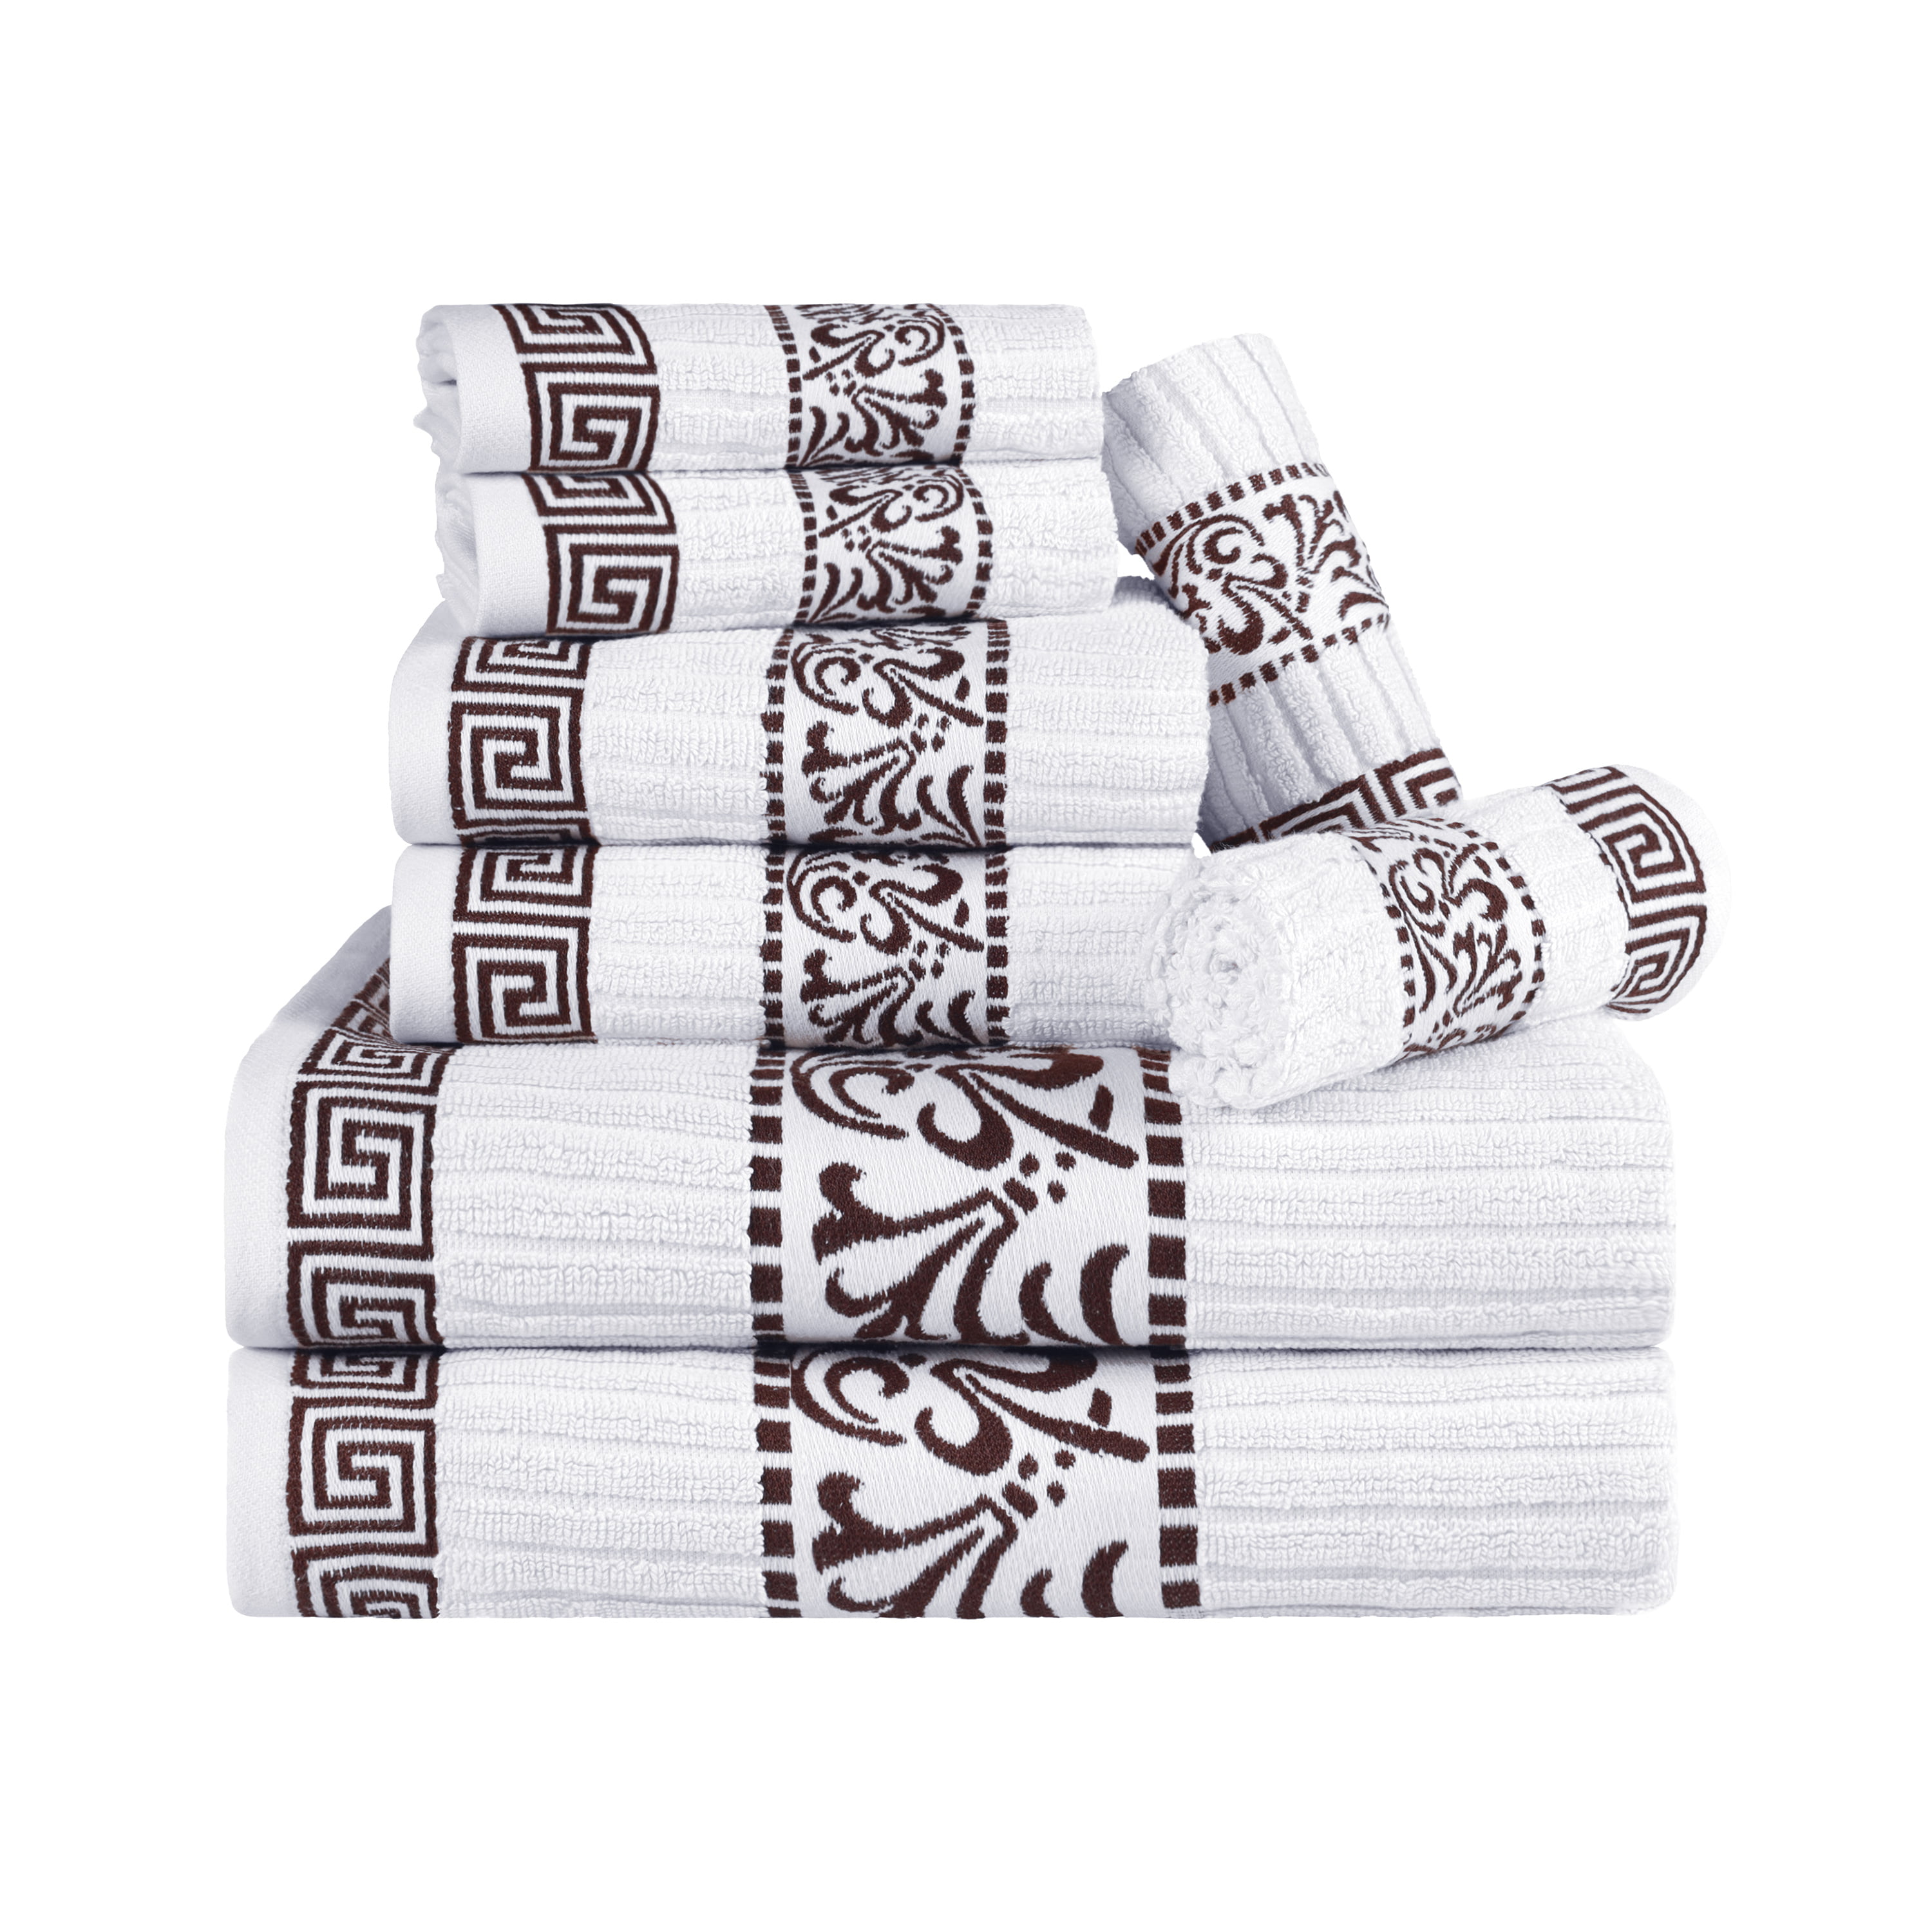 Lulshou Towels Clearance,Bath Towel Bathroom Set Deluxe Bath Towel Ultra Soft Cotton Towel Set High Absorbent Towel Includes Towel 13.5x29.5 in